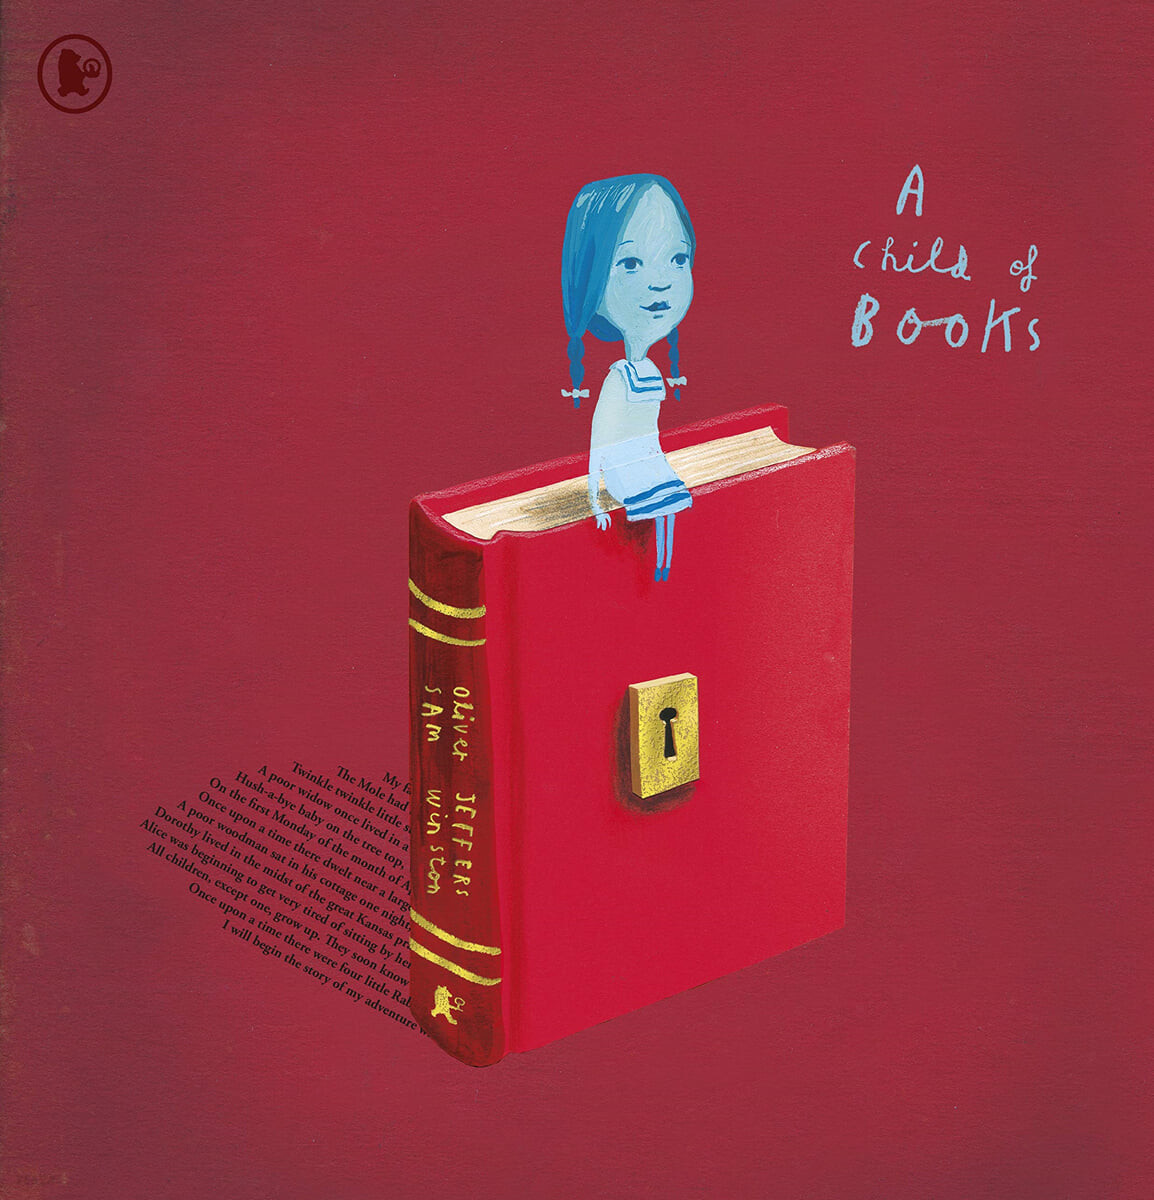 (A)Child of books